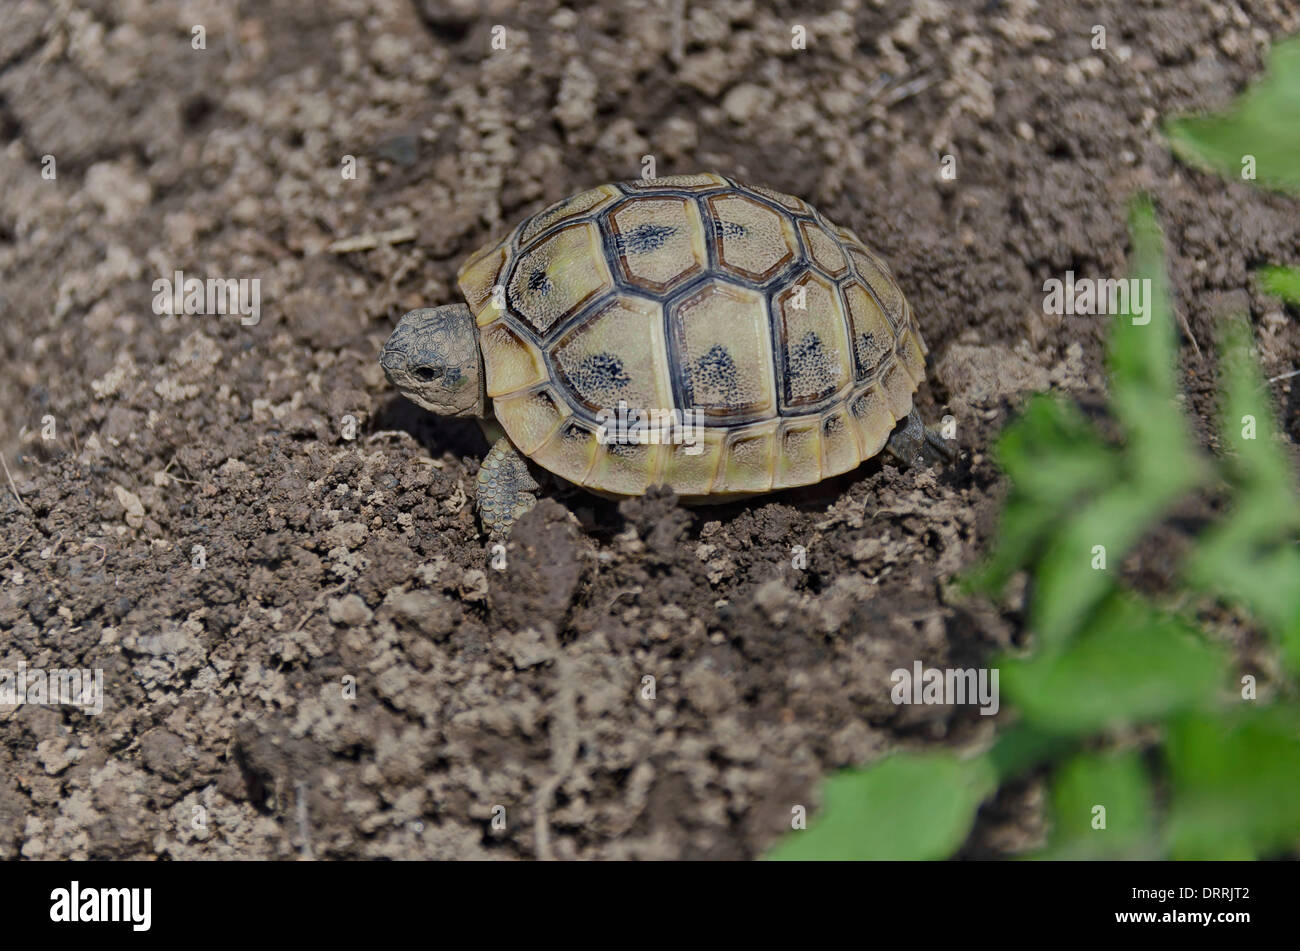 Small tortoise in garden Stock Photo